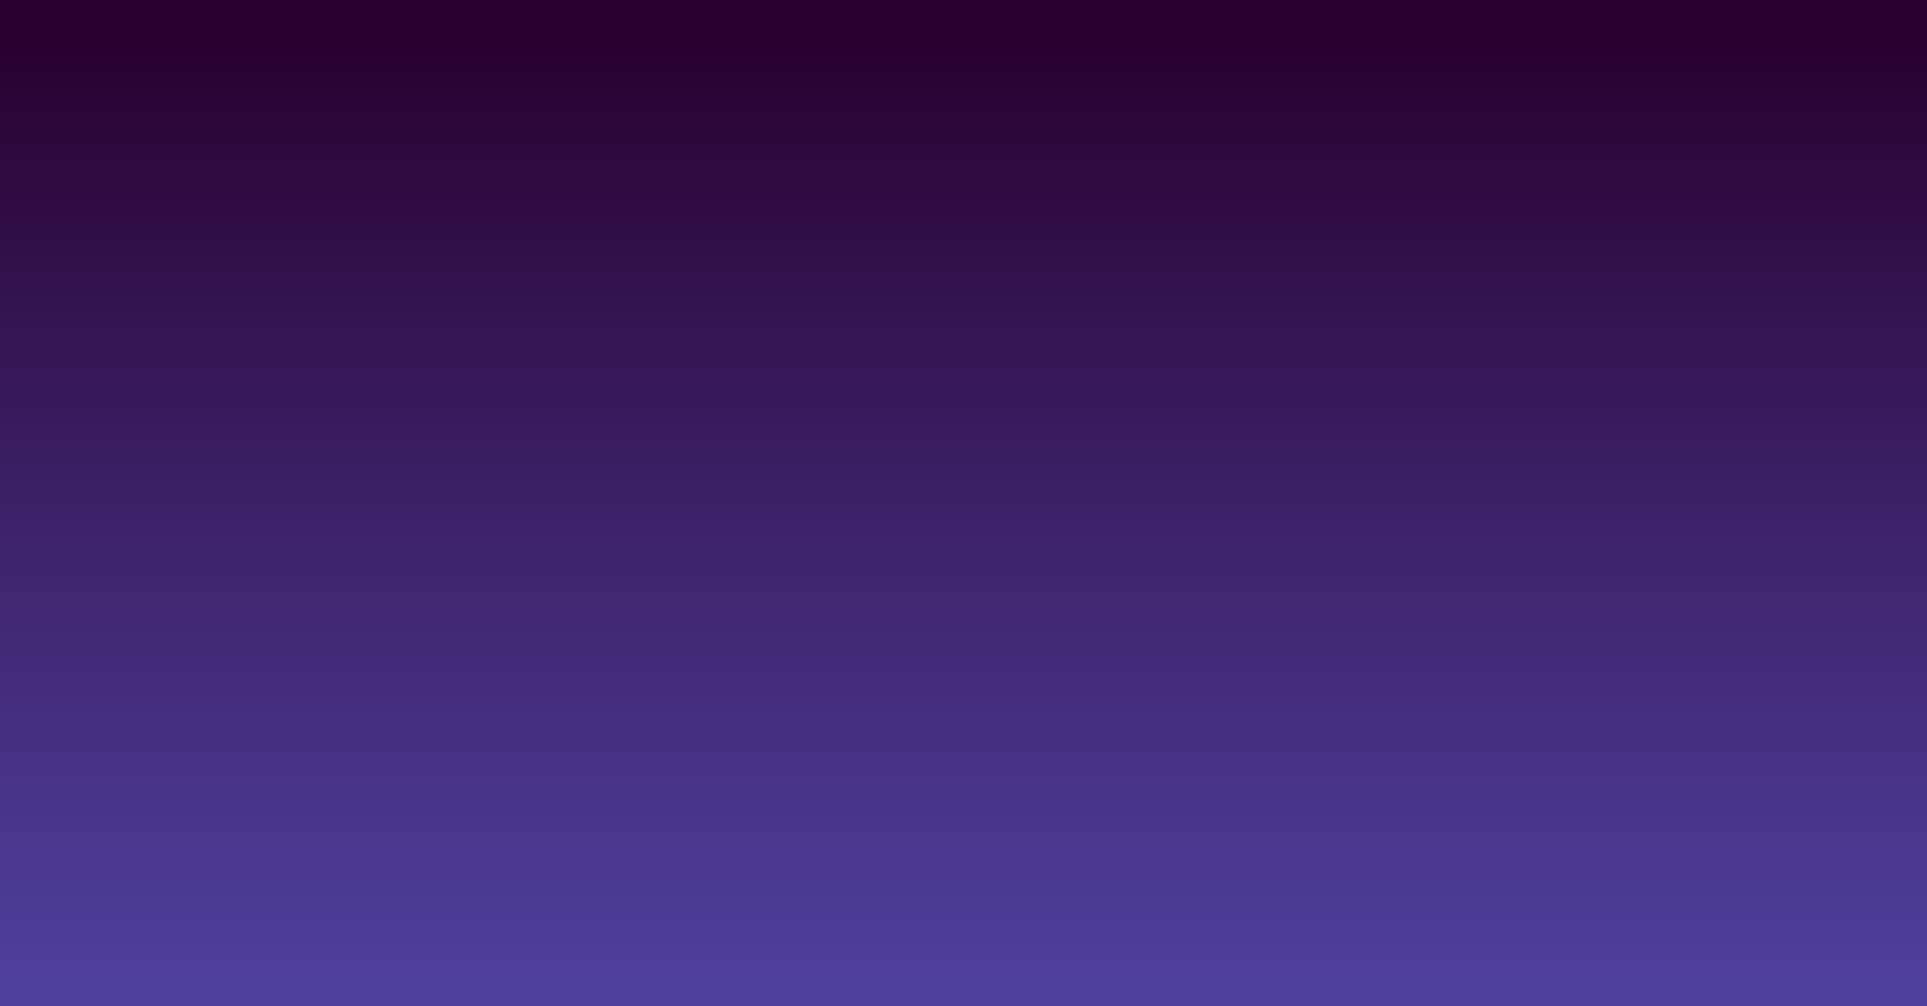 Gradient sky transitioning from dark purple to light purple